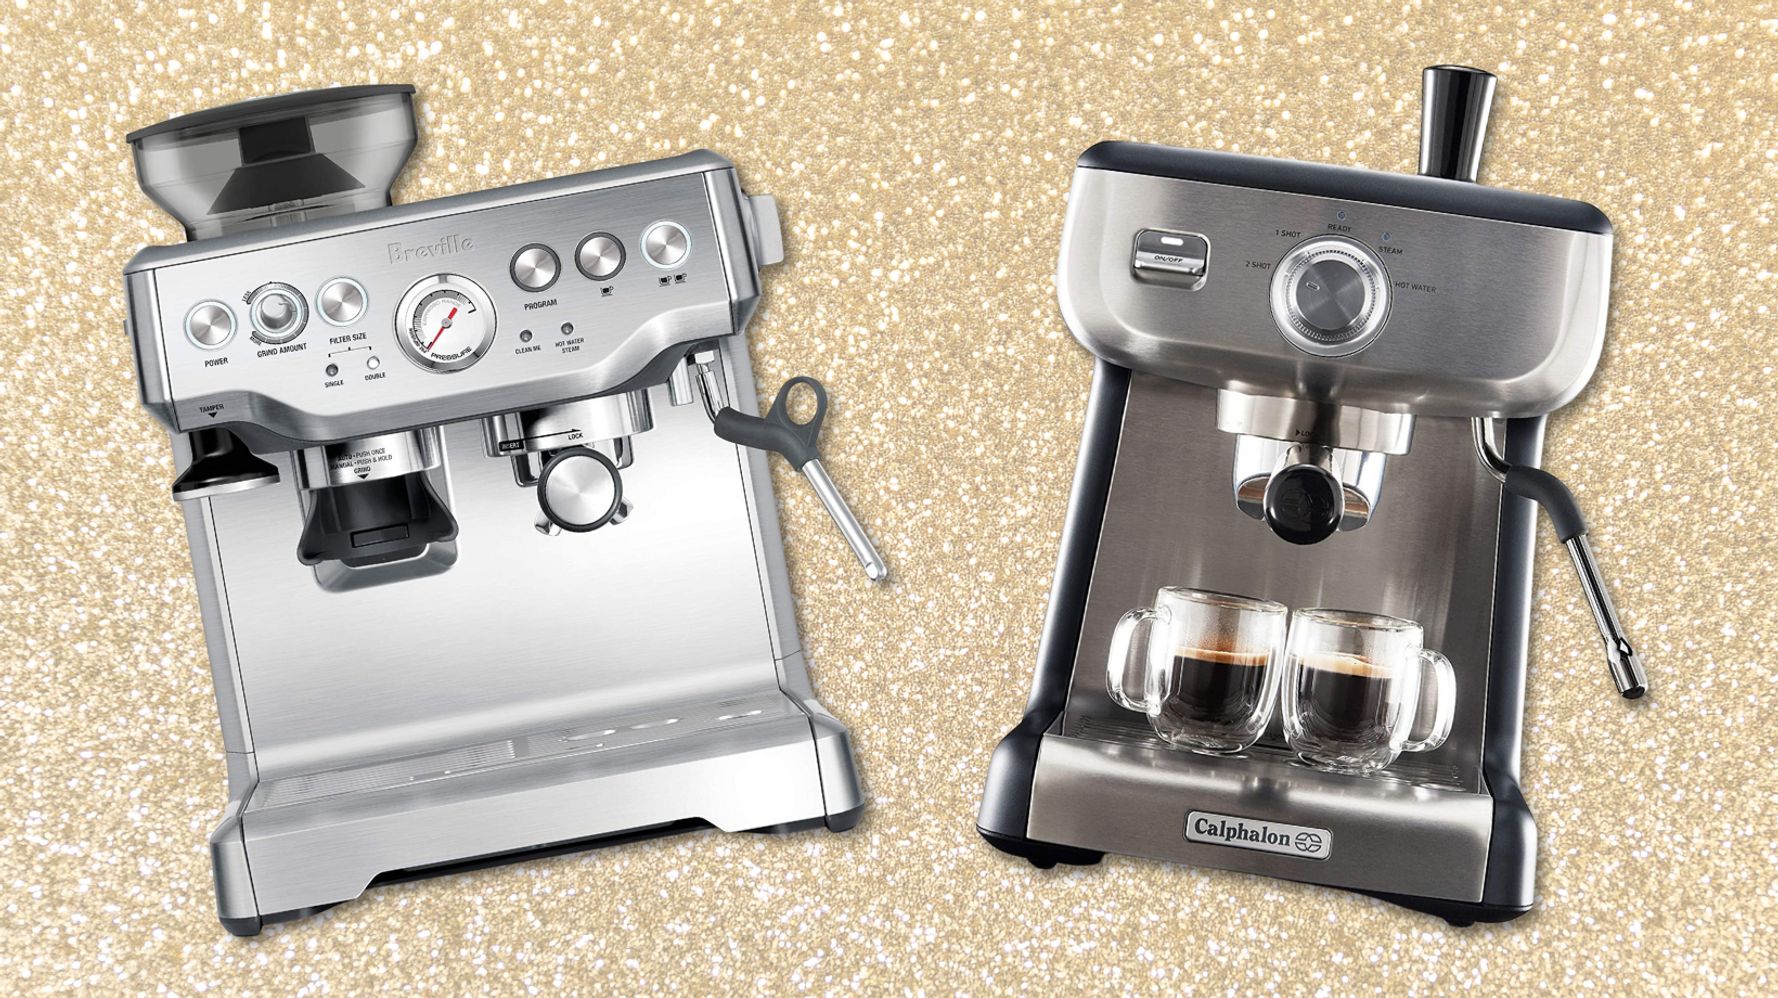 The Best Gift Is the Nespresso Espresso Machine